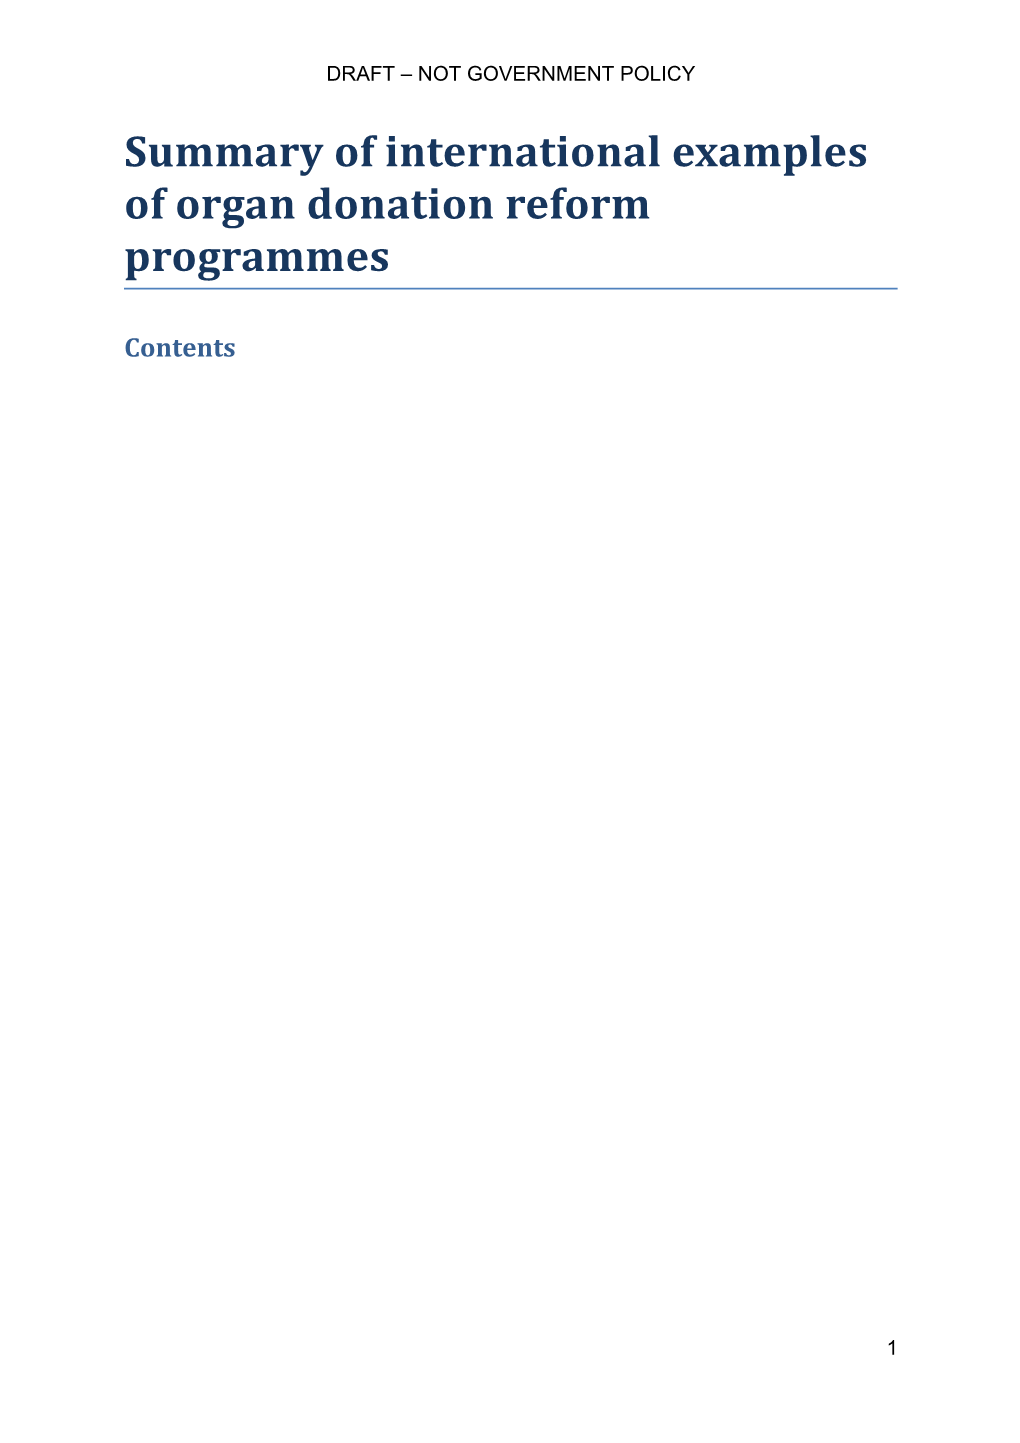 Summary of International Examples of Organ Donation Reform Programmes